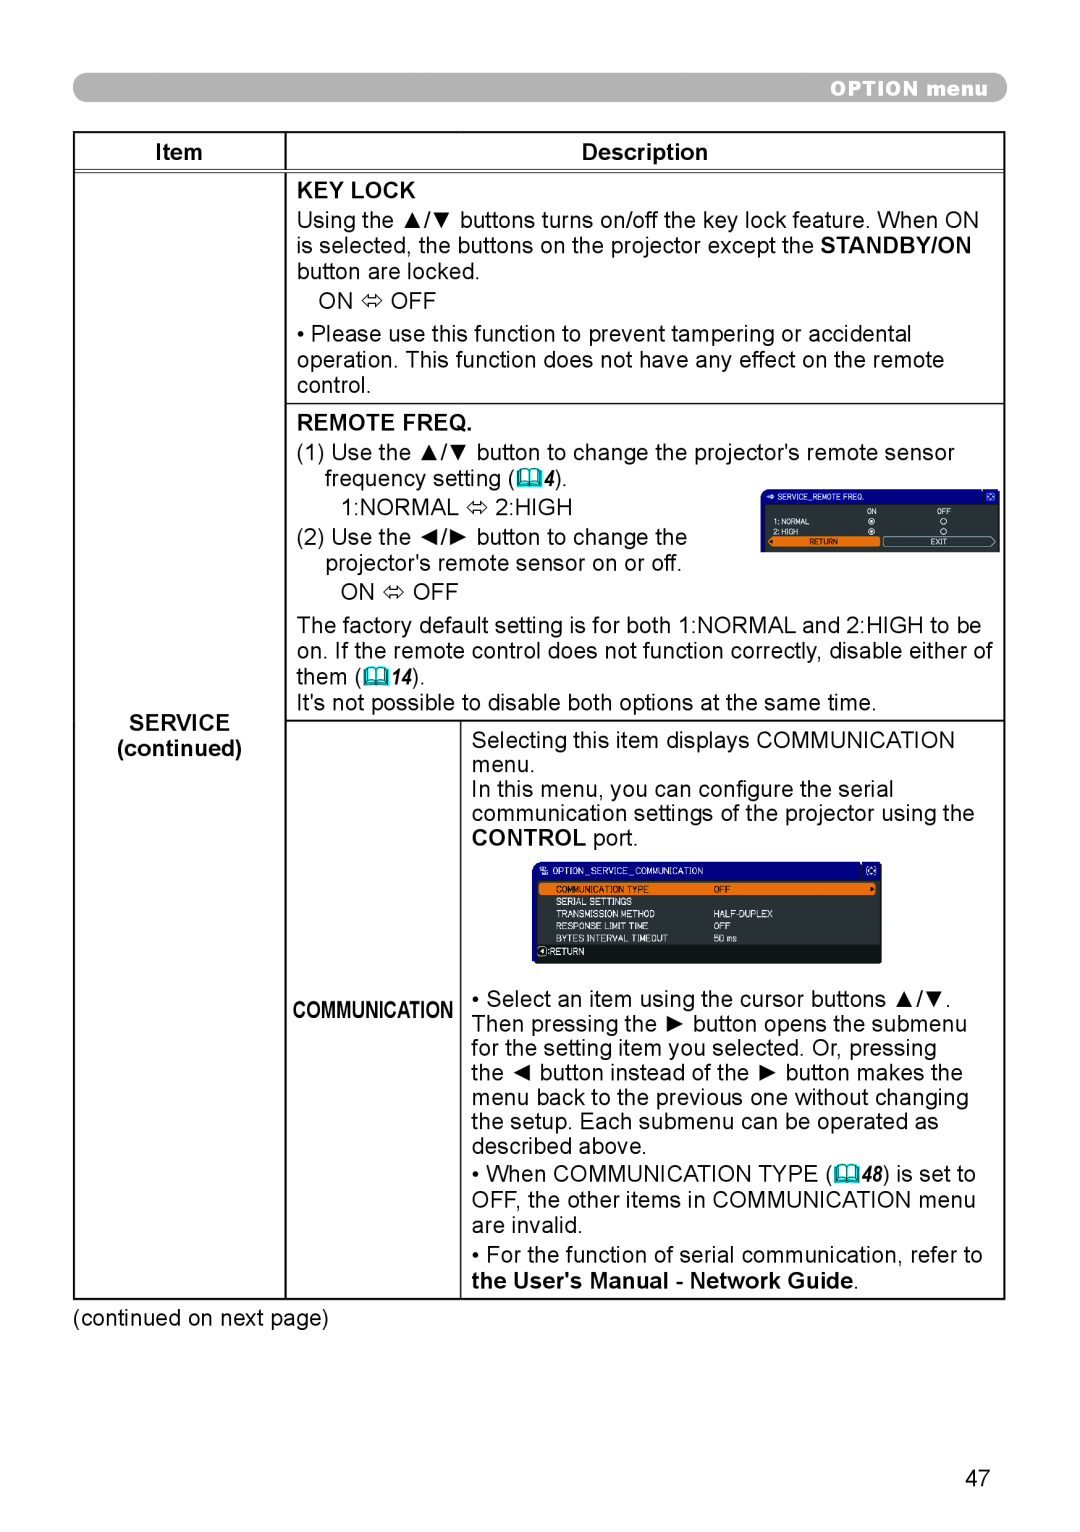 Dukane 8755J-RJ Description, Key Lock, Remote Freq, Service, continued, CONTROL port, the Users Manual - Network Guide 